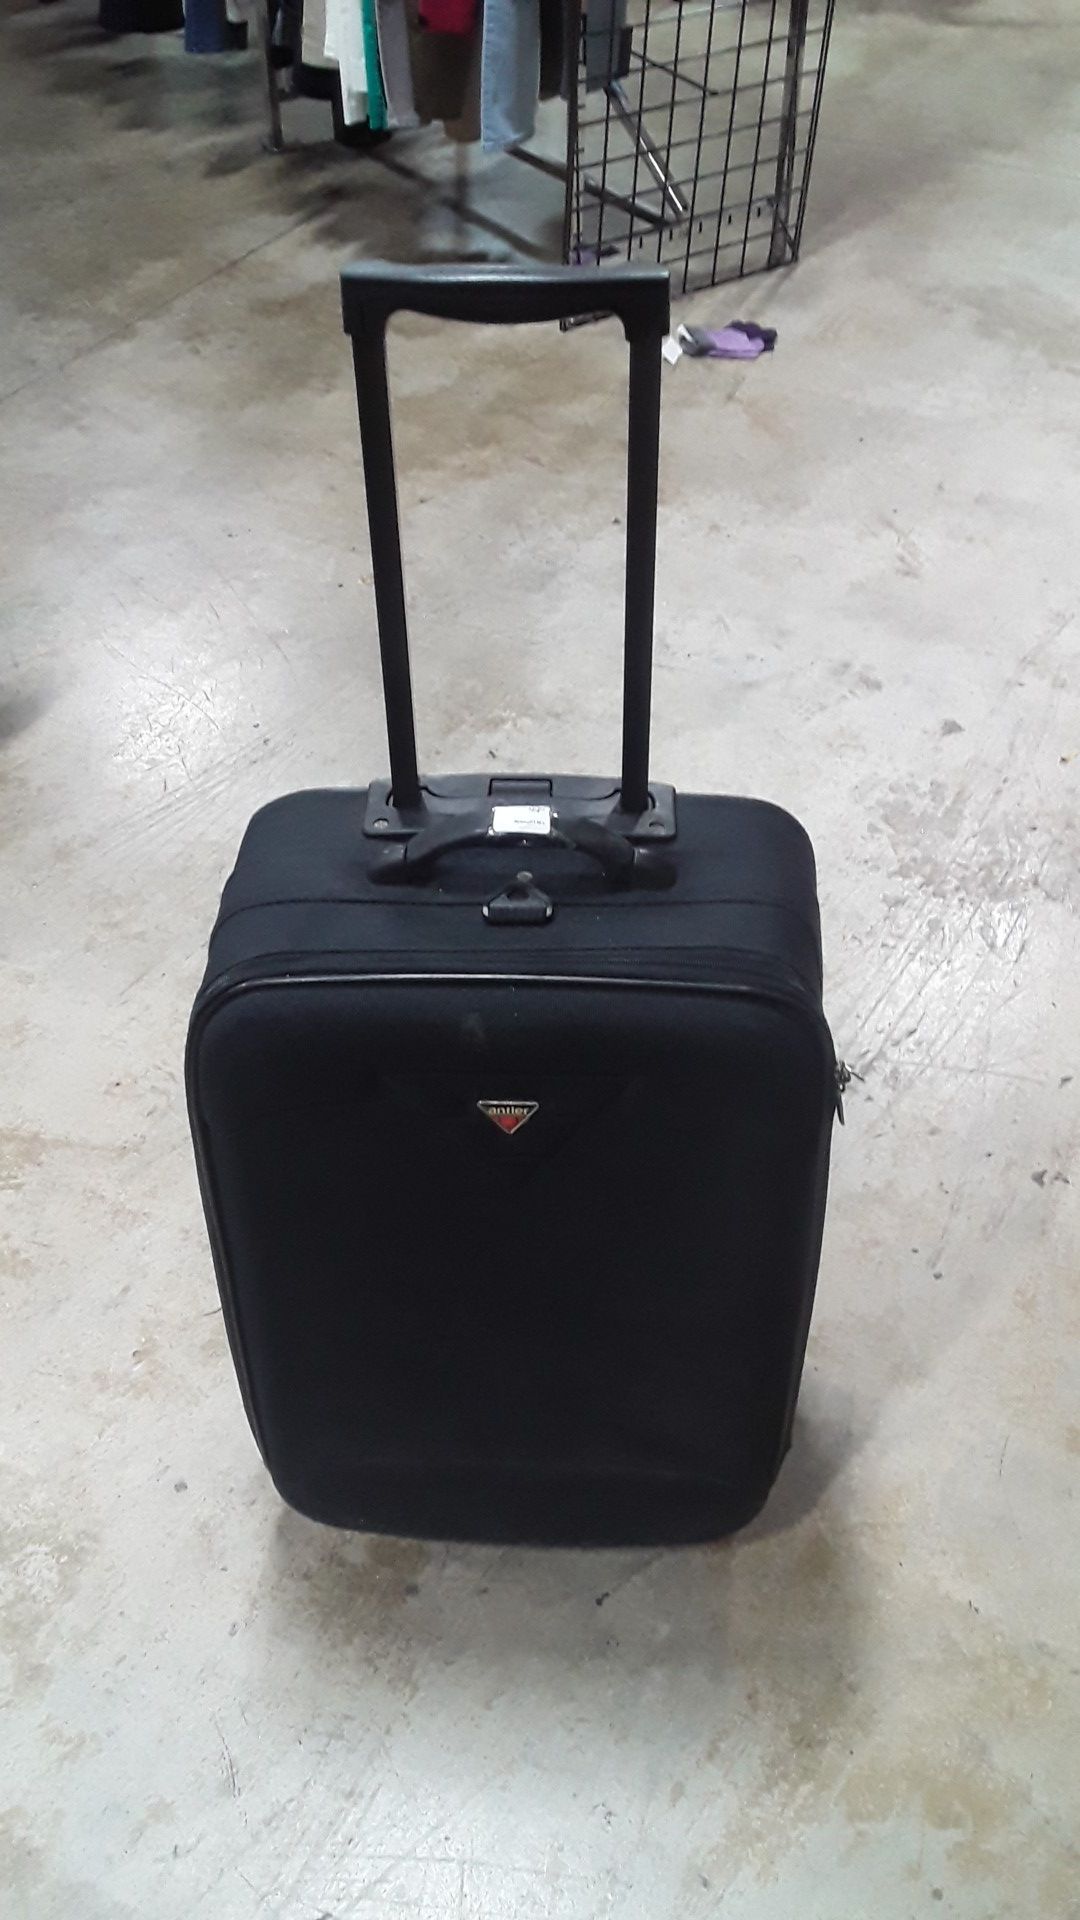 Antler black suitcase